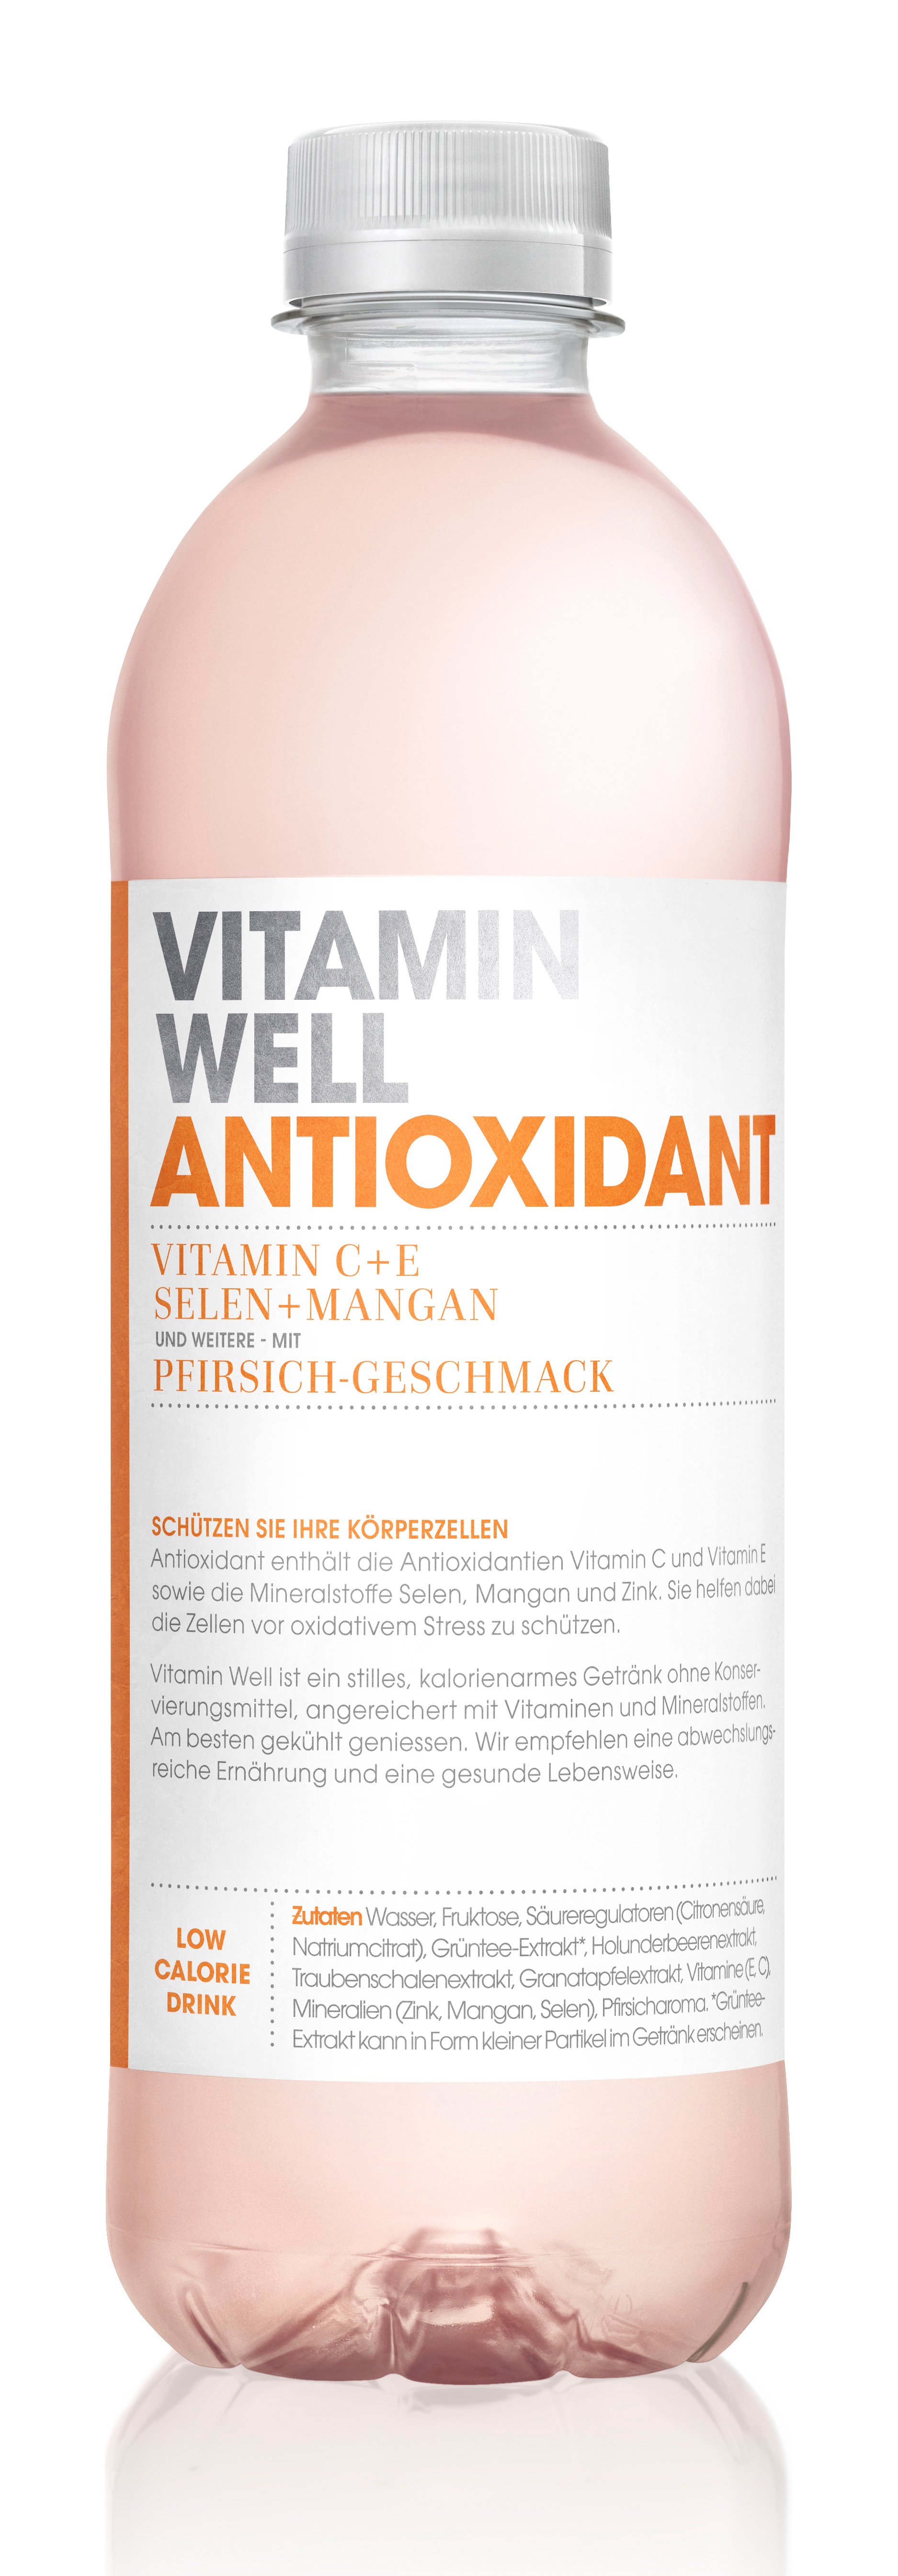 Vitamin Well Antioxidant Pic1